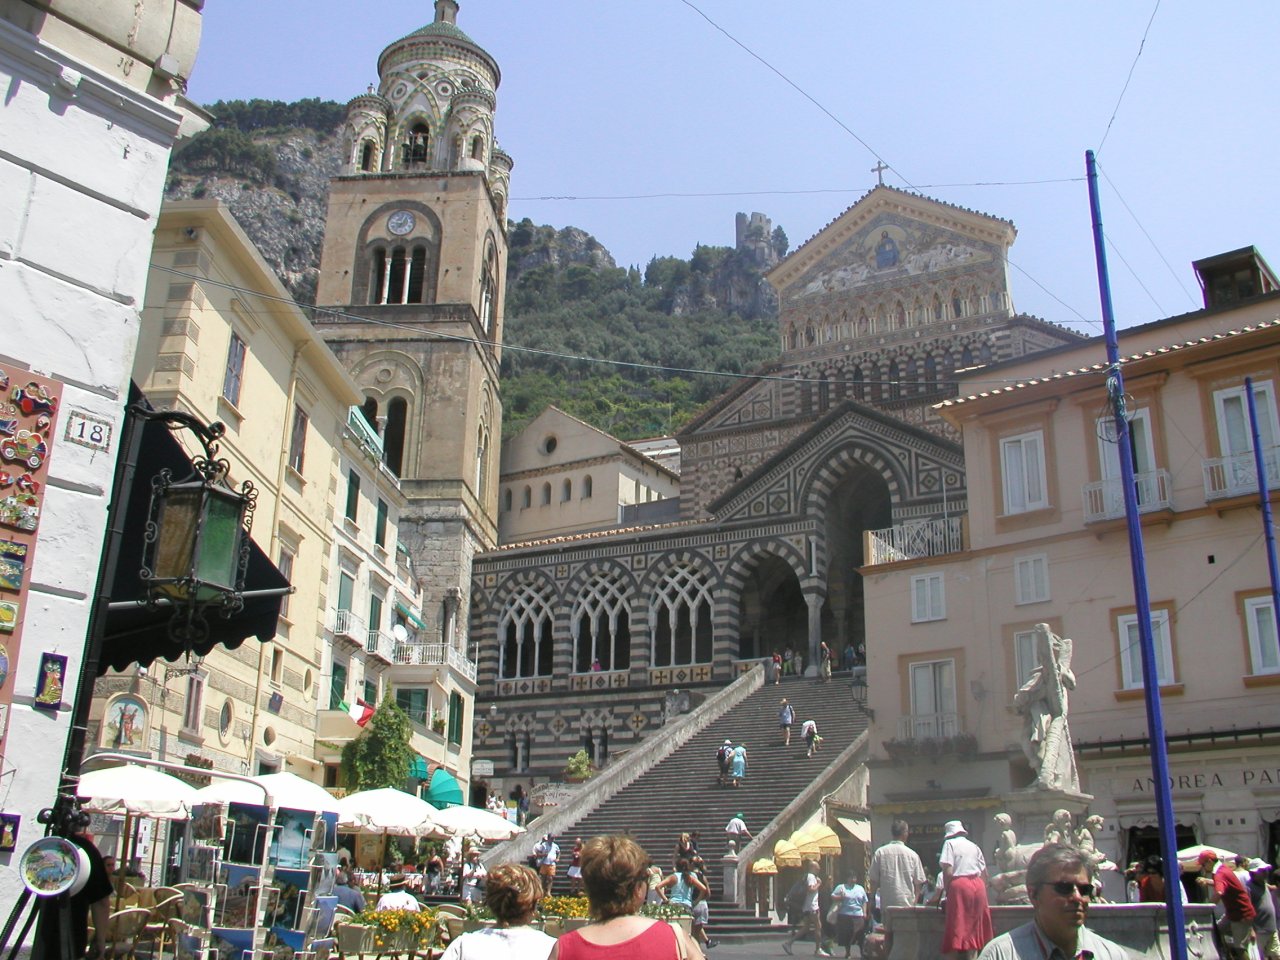 JPEG image - Amalfi : Centre of town ...